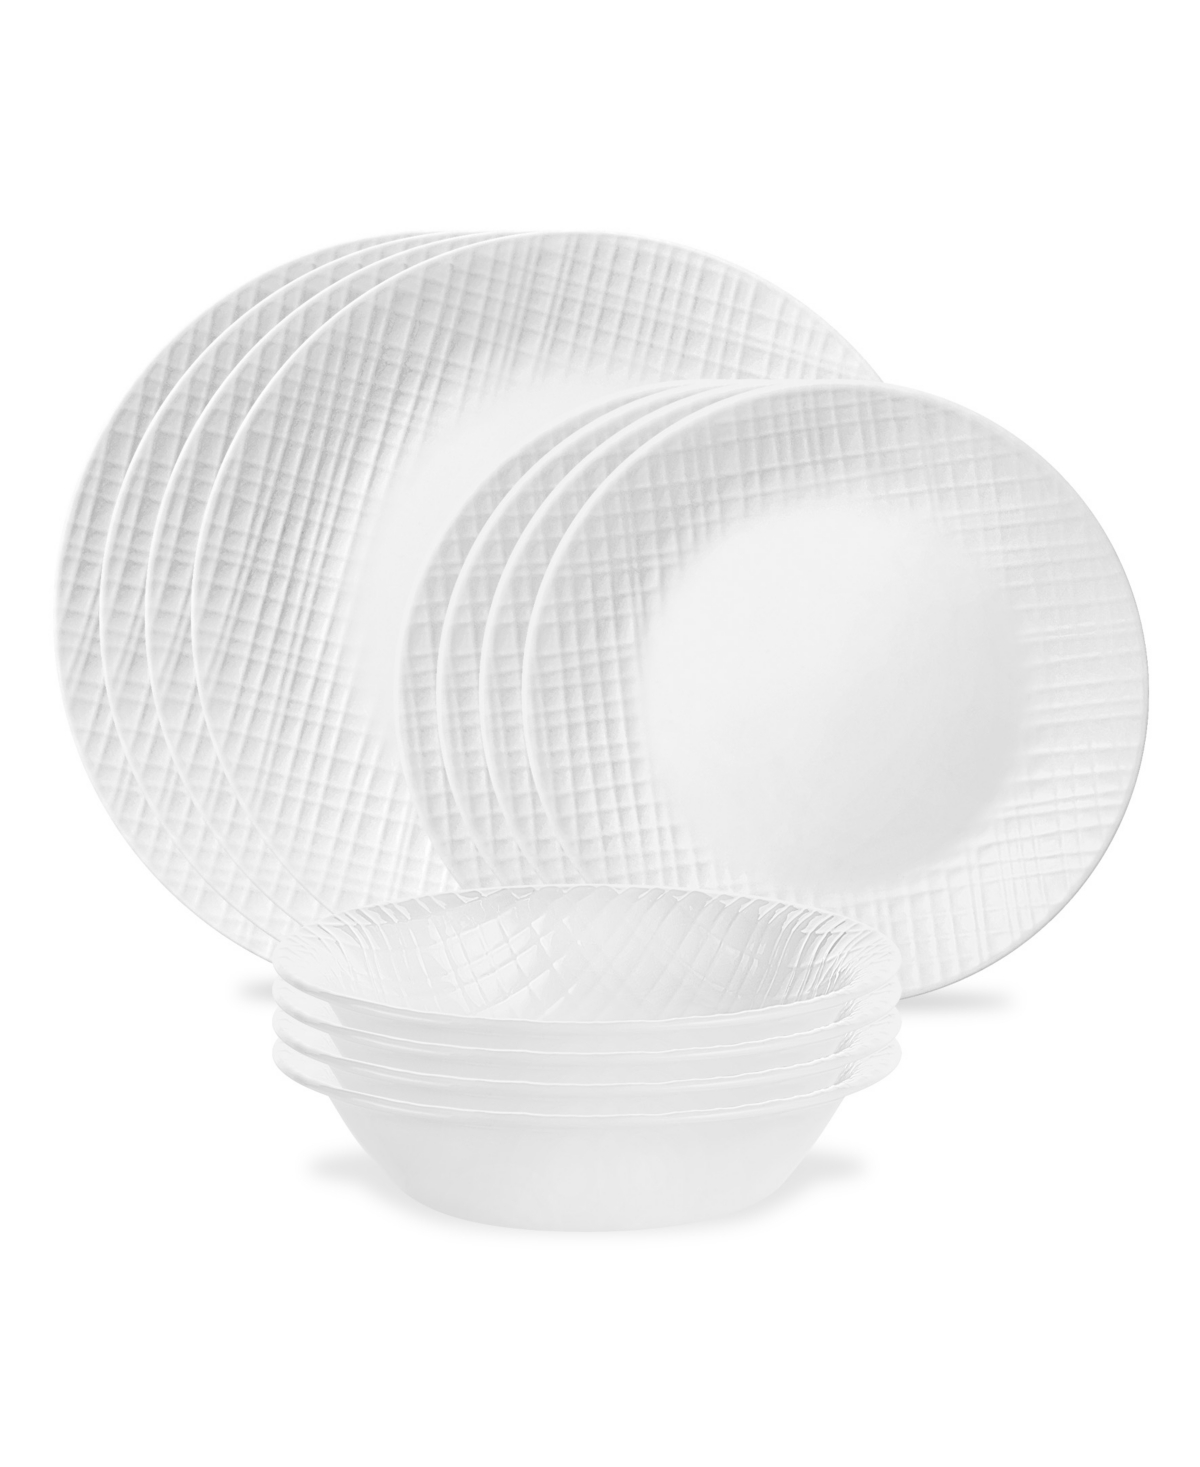 Embossed Linen Weave 12 Piece Dinnerware Set, Service for 4 - White